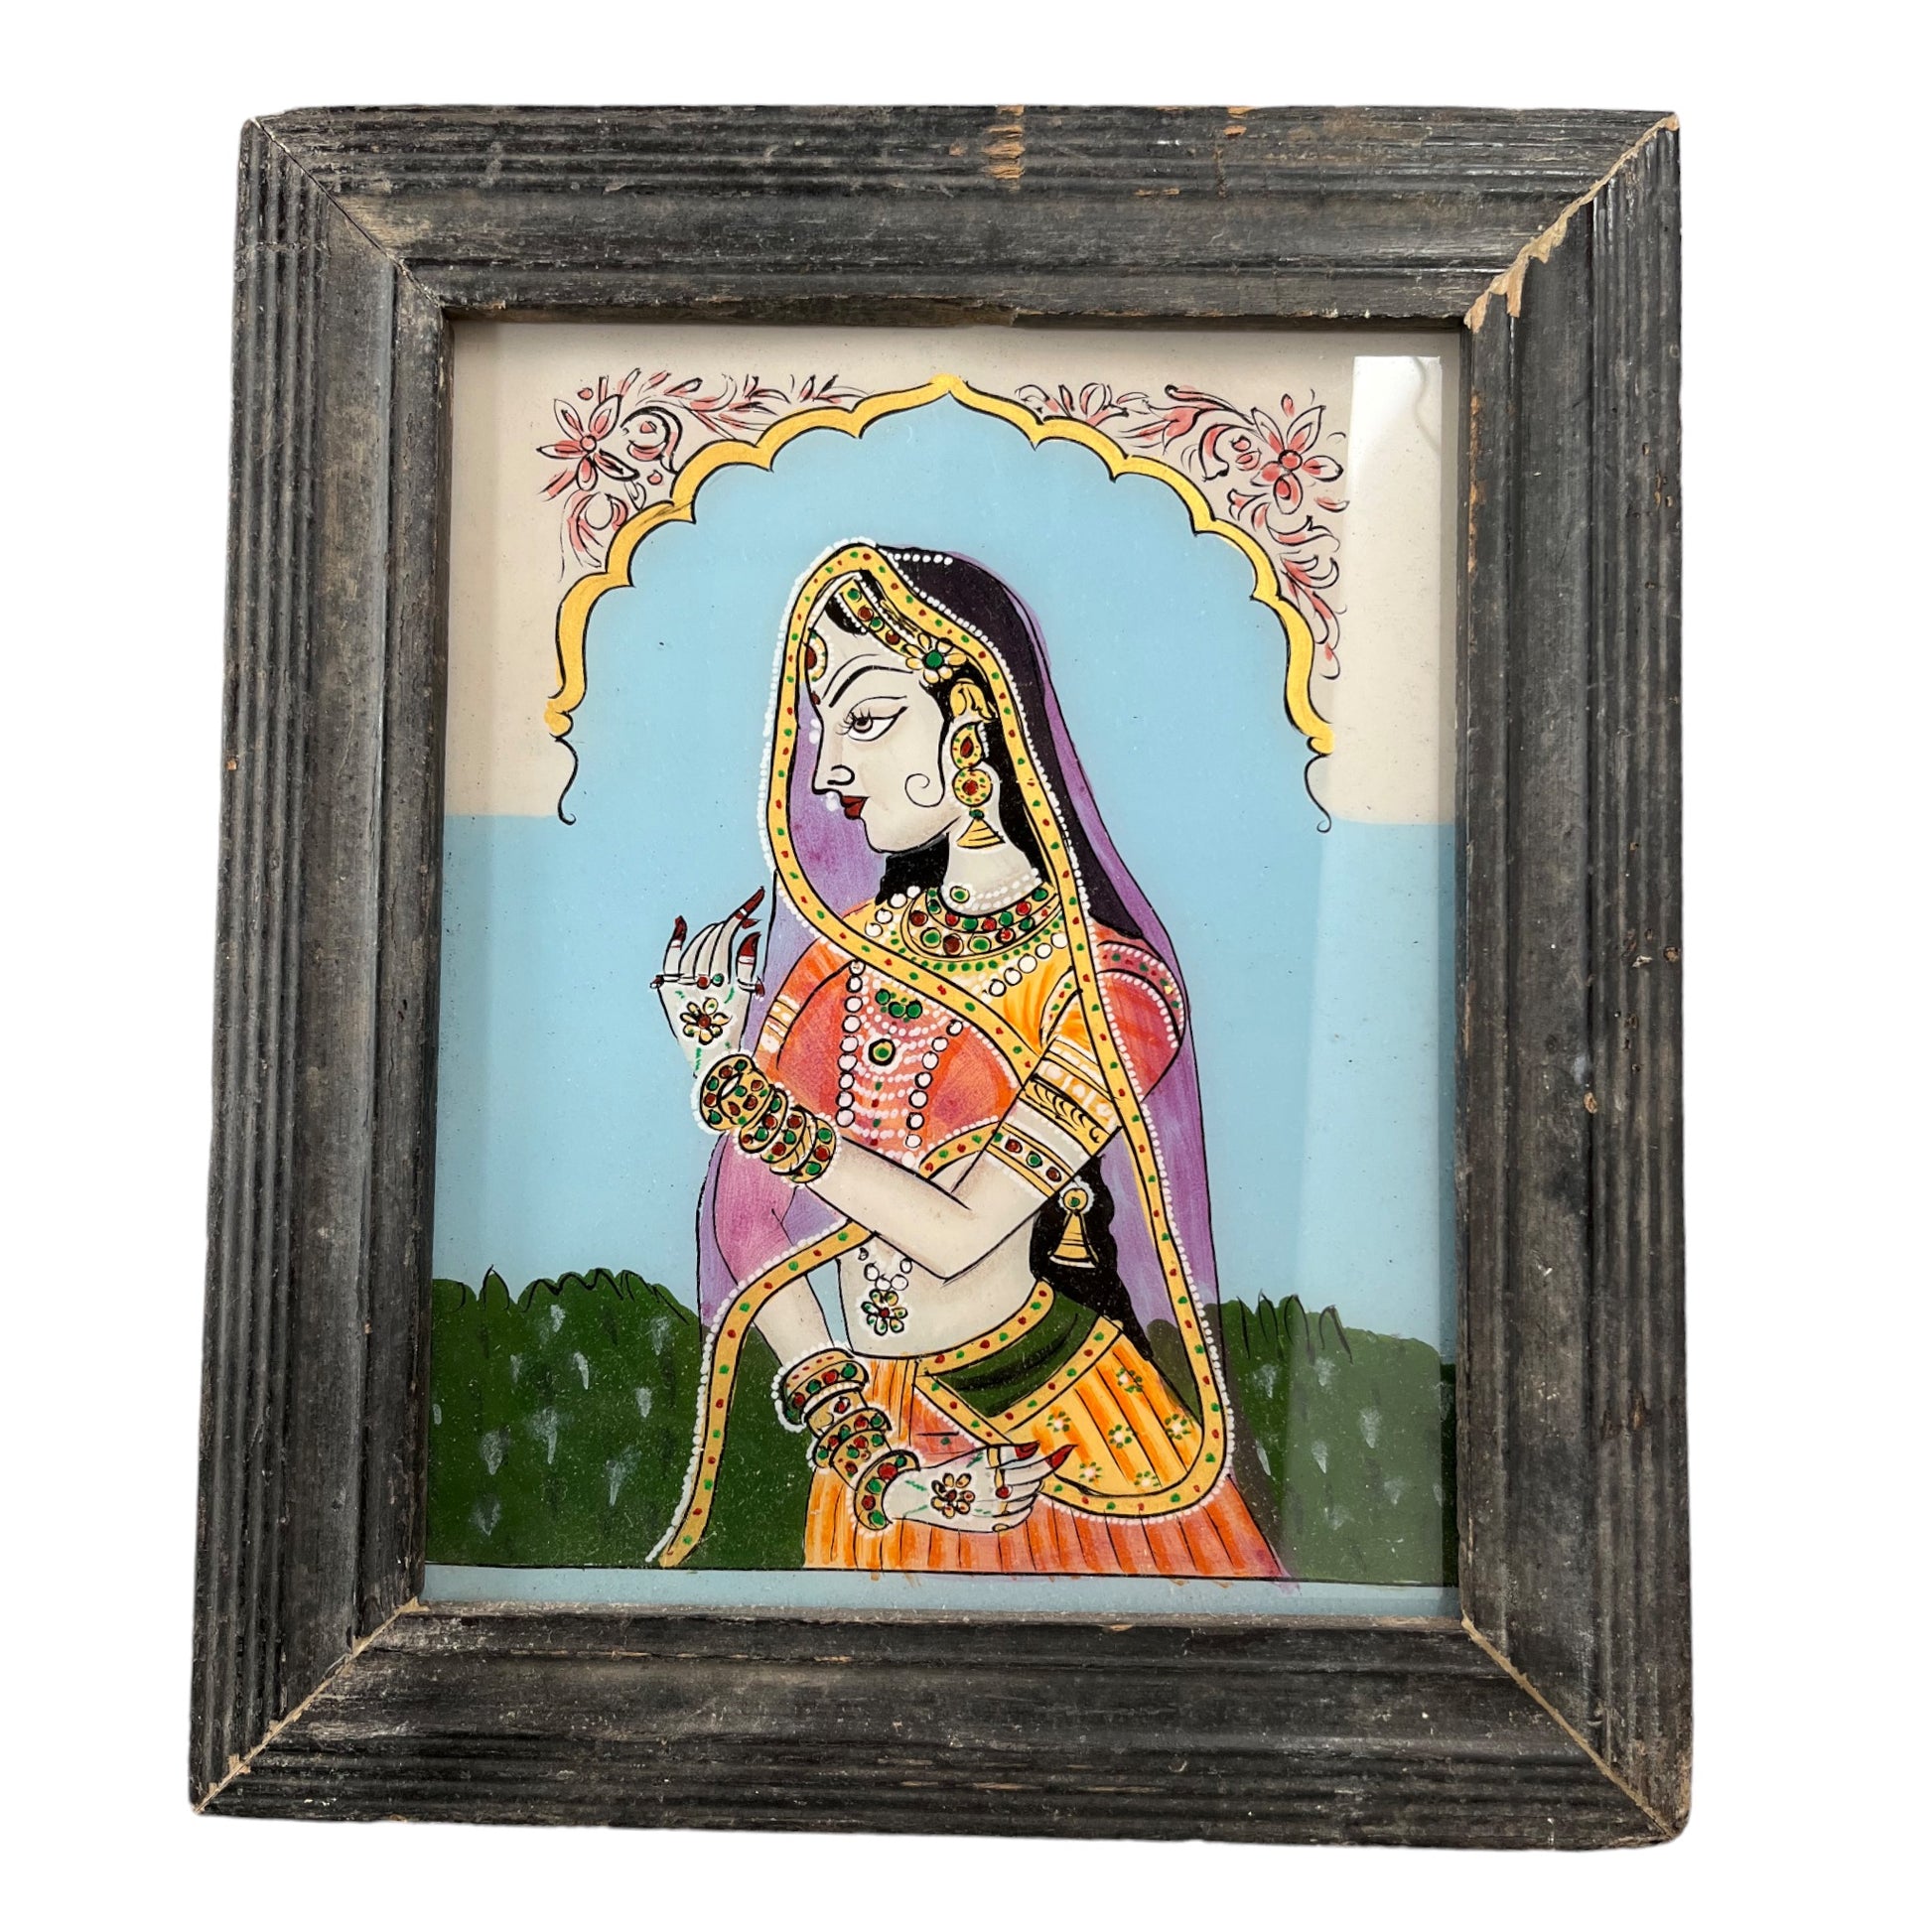 Medium indian figures glass painting